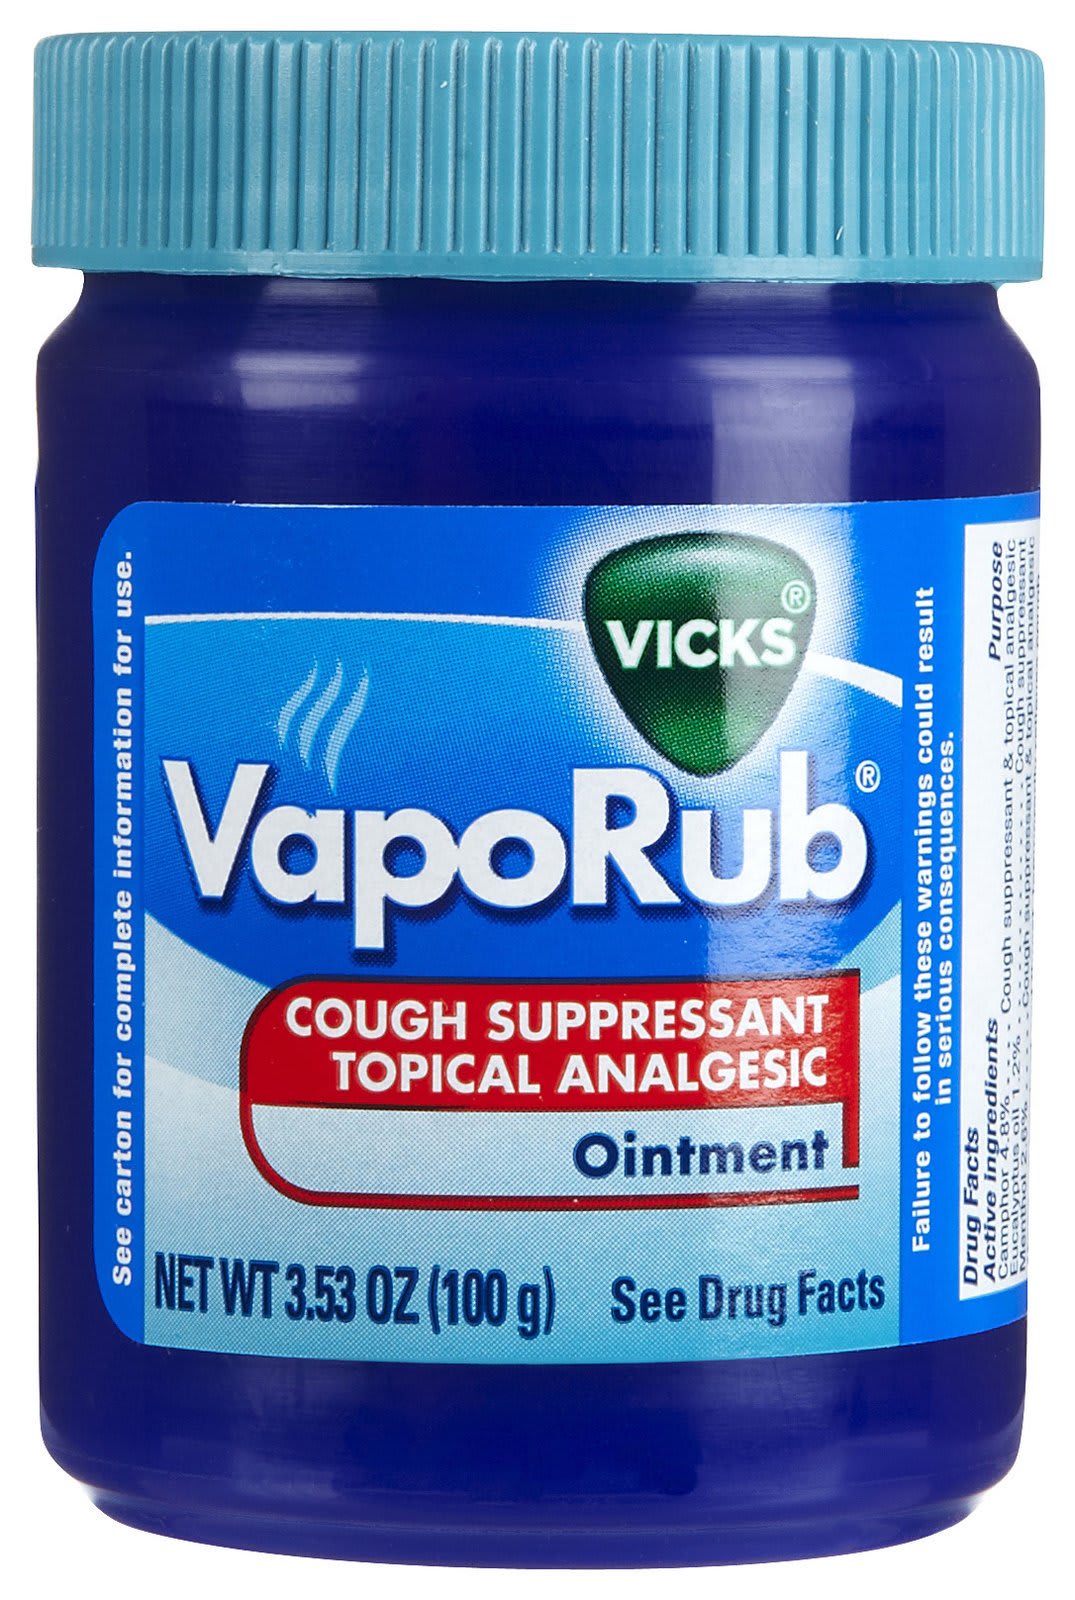 Vicks VapoRub Chest Rub Ointment - 3.53 oz